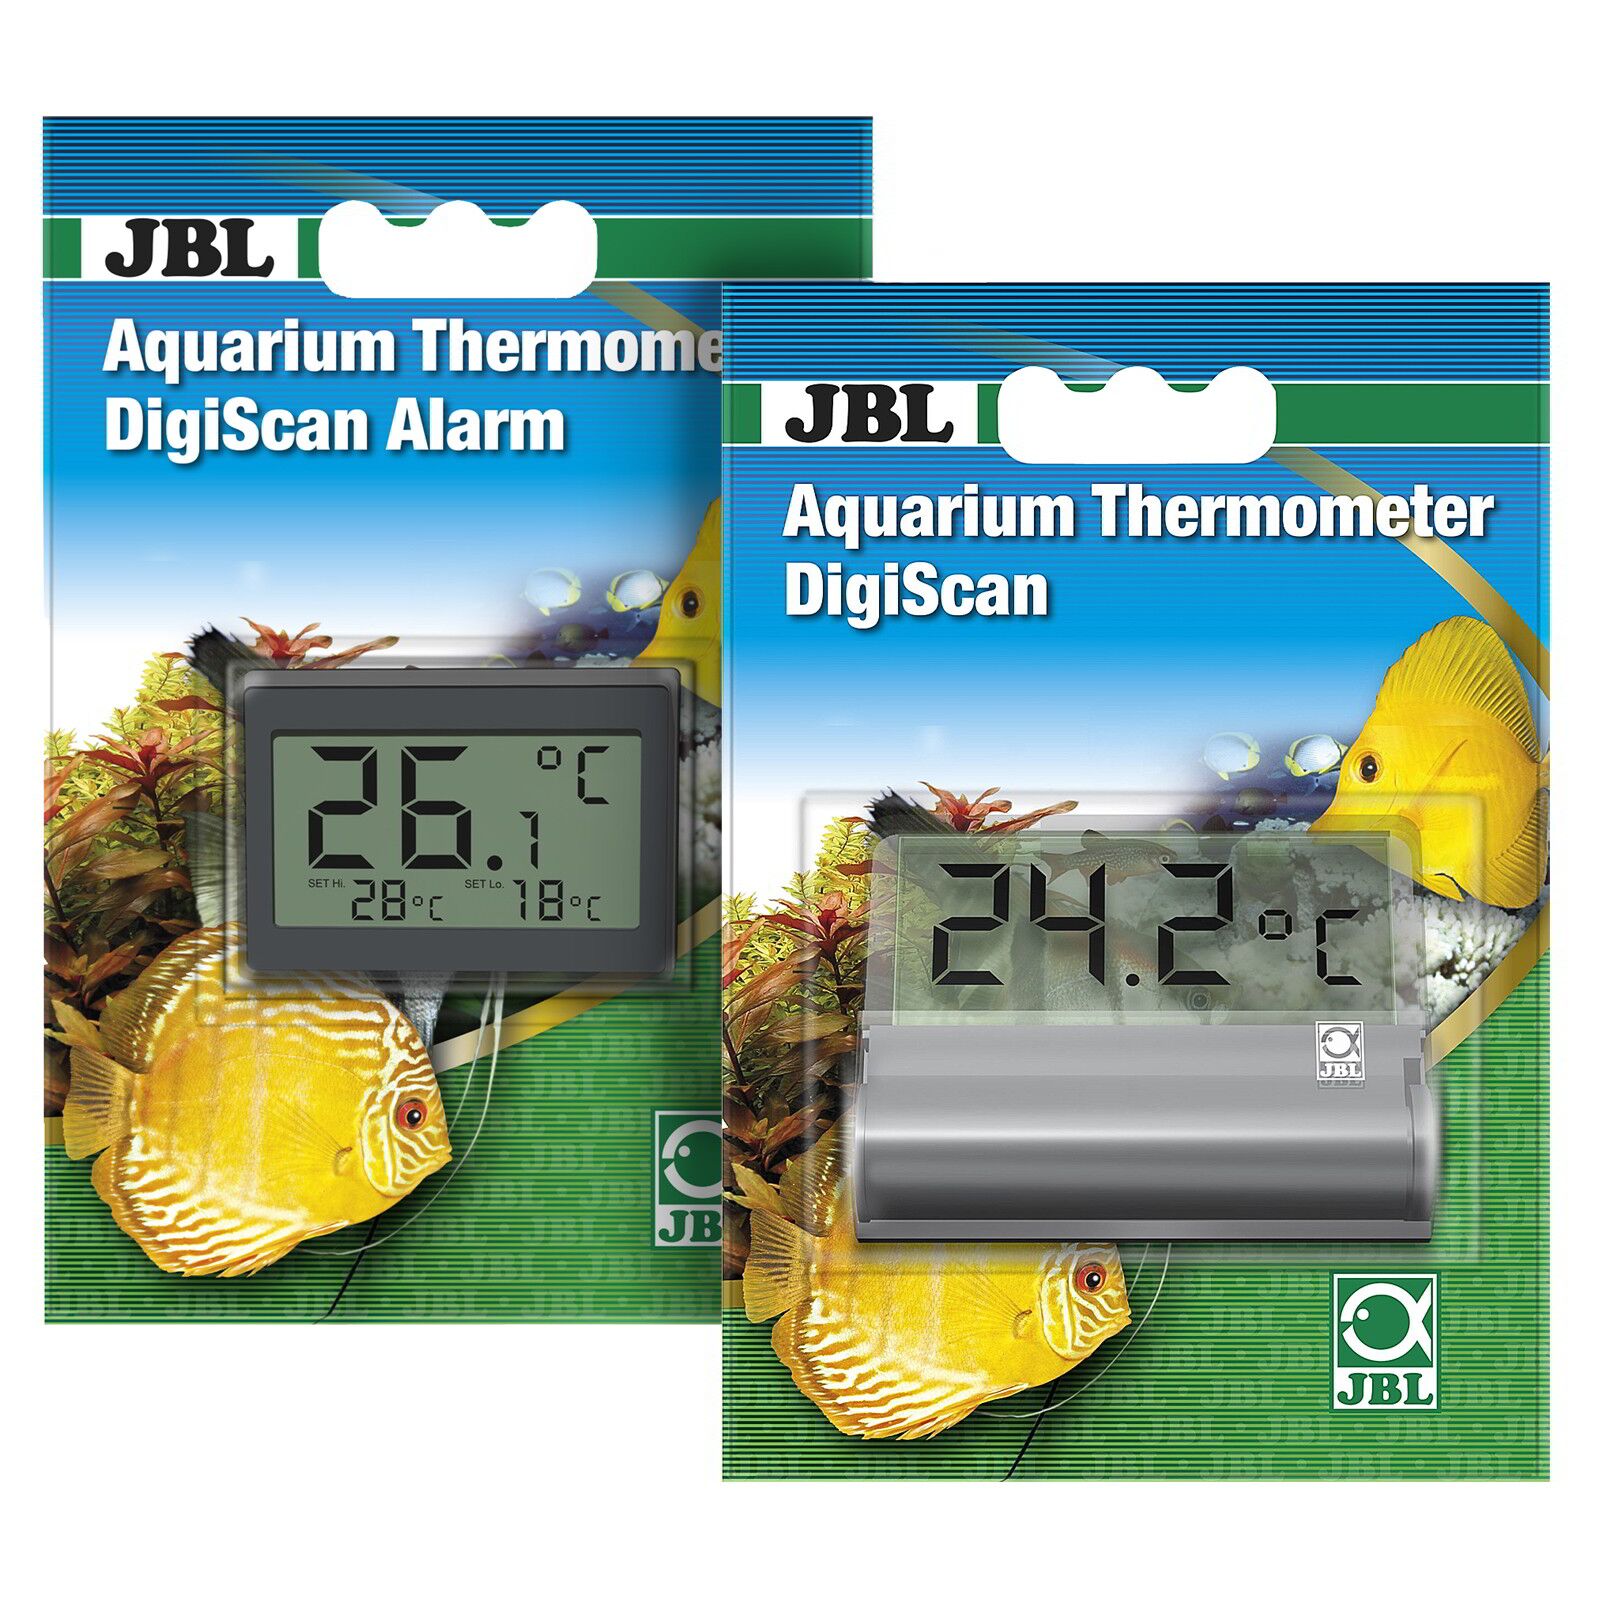 JBL Aquarium Thermometer DigiScan, DigiScan